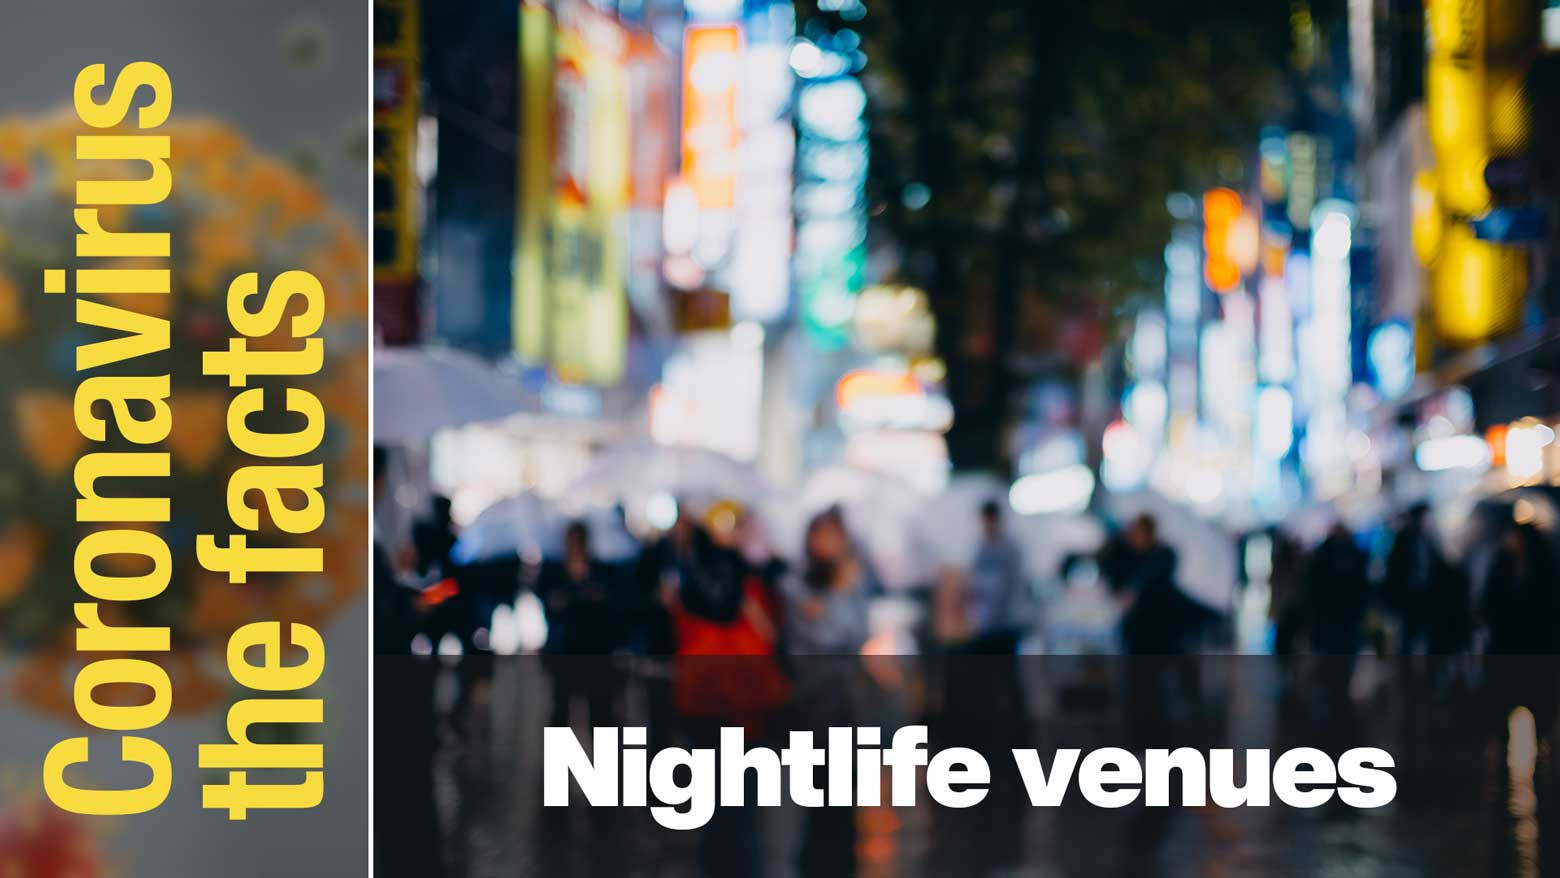 Guidelines for nightlife venues